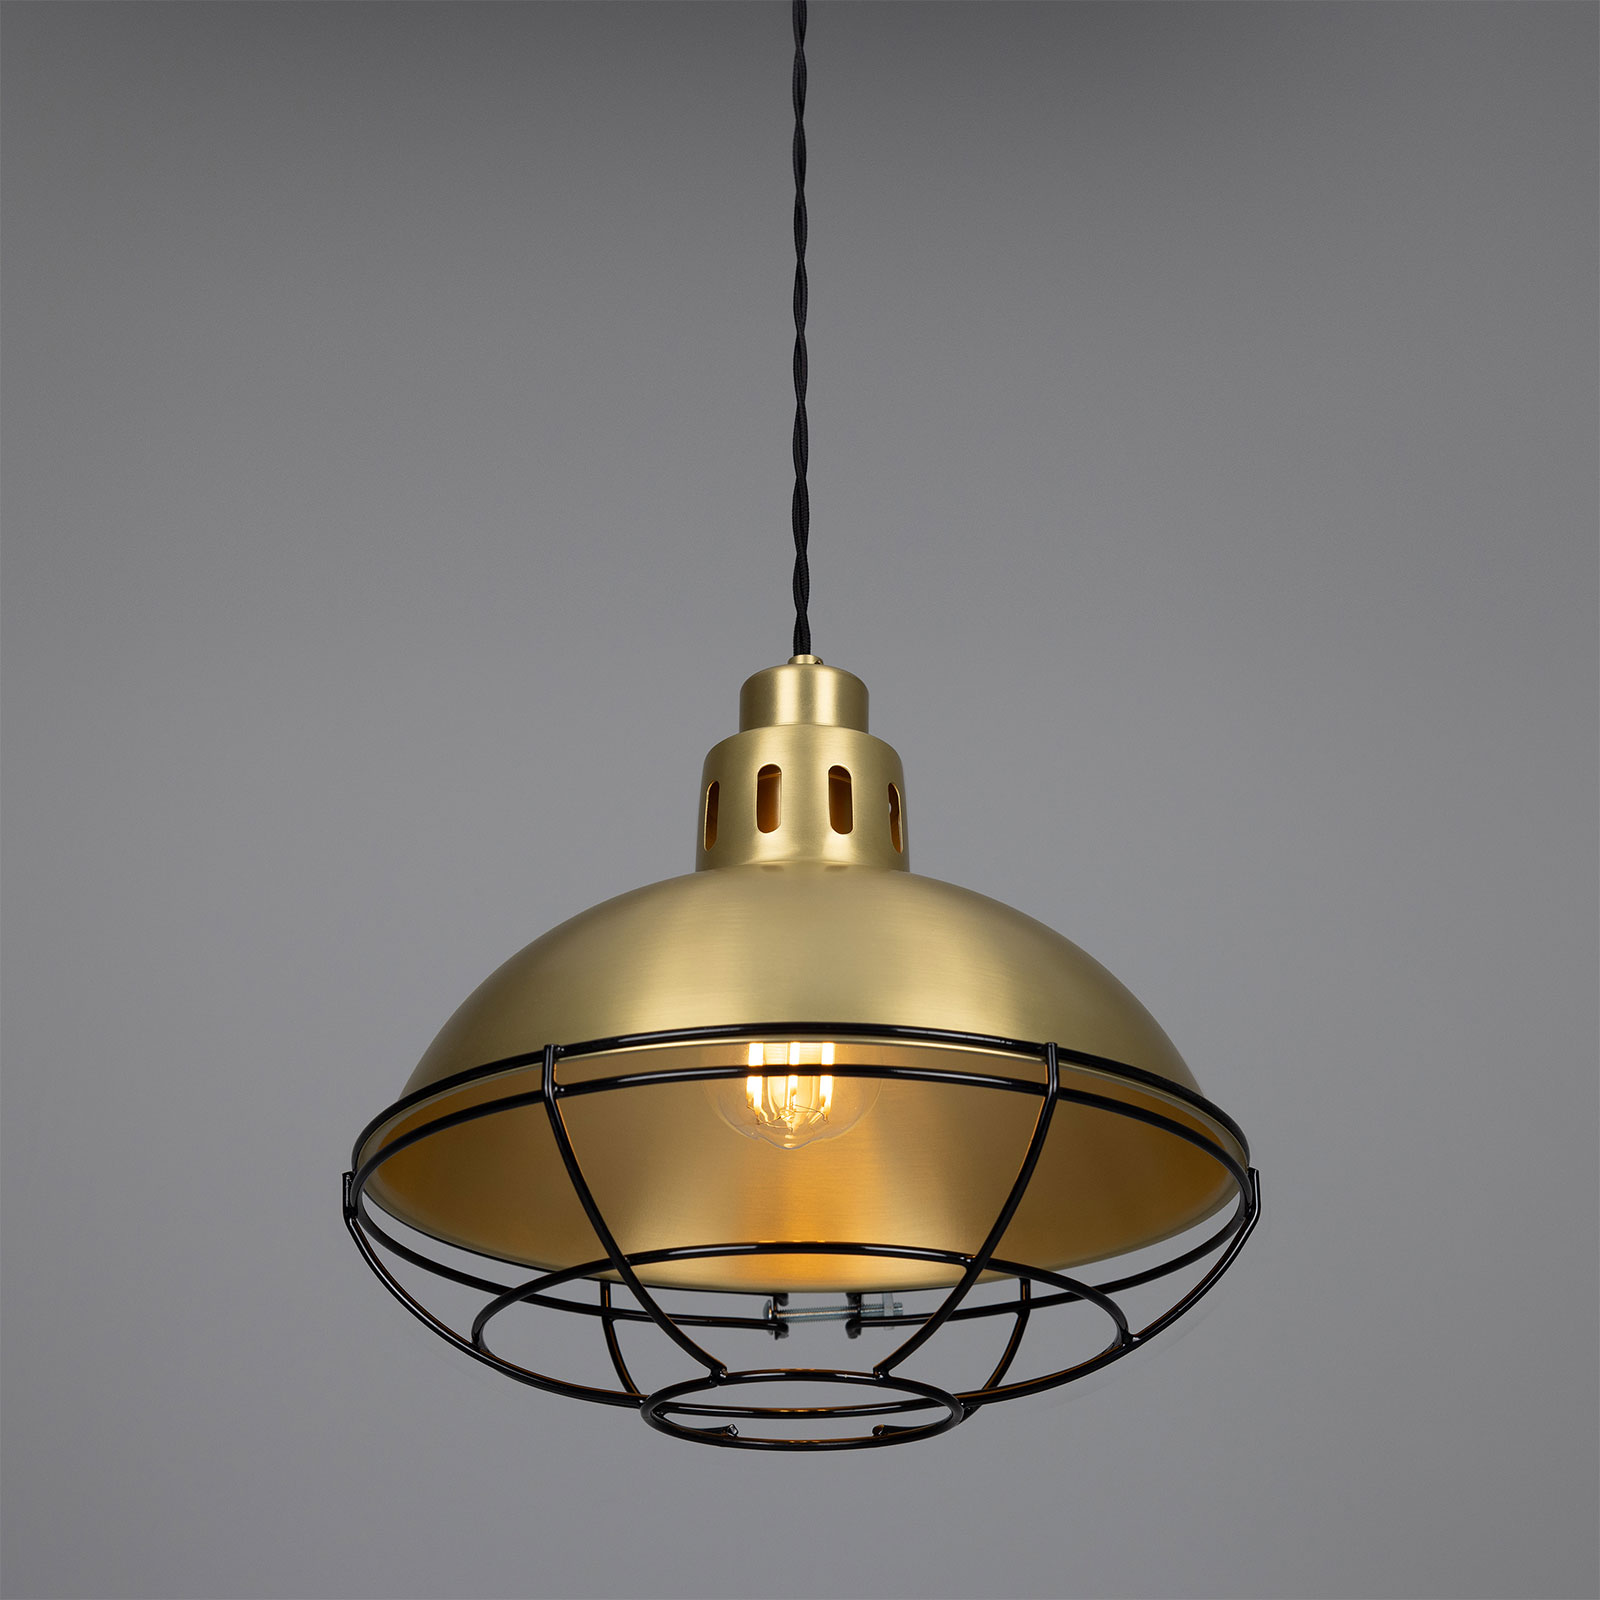 Klassische Fabriklampe aus Messing mit Schutzgitter-Käfig, 32 cm: Messing matt satiniert